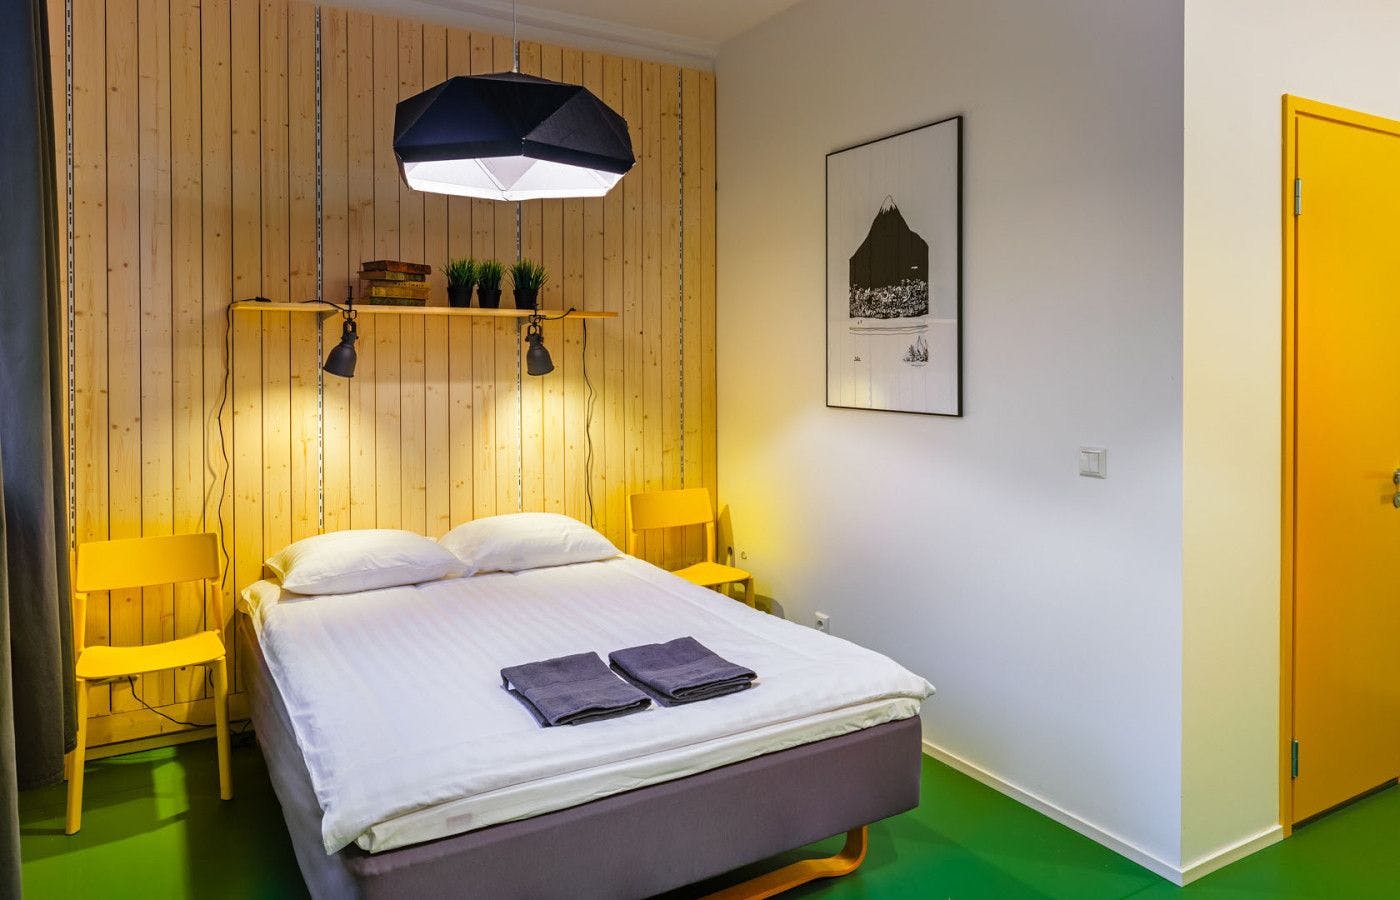 Hektor design hostel in tartu estonia - best hostels in Europe for couples - ratepunk 